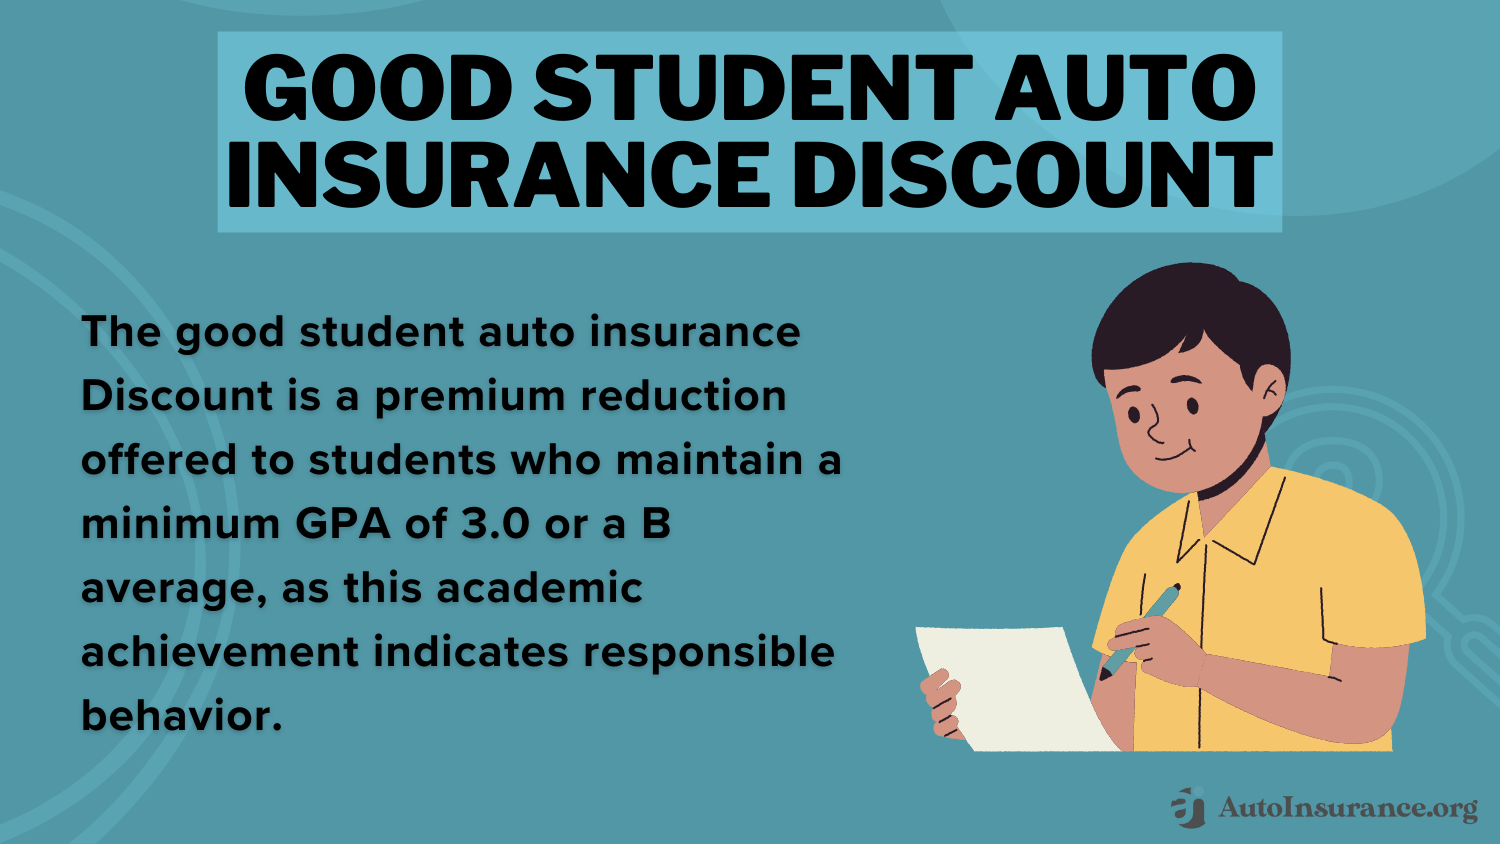 State Farm Auto Insurance Discounts: Good Student Auto Insurance Discount Definition Card